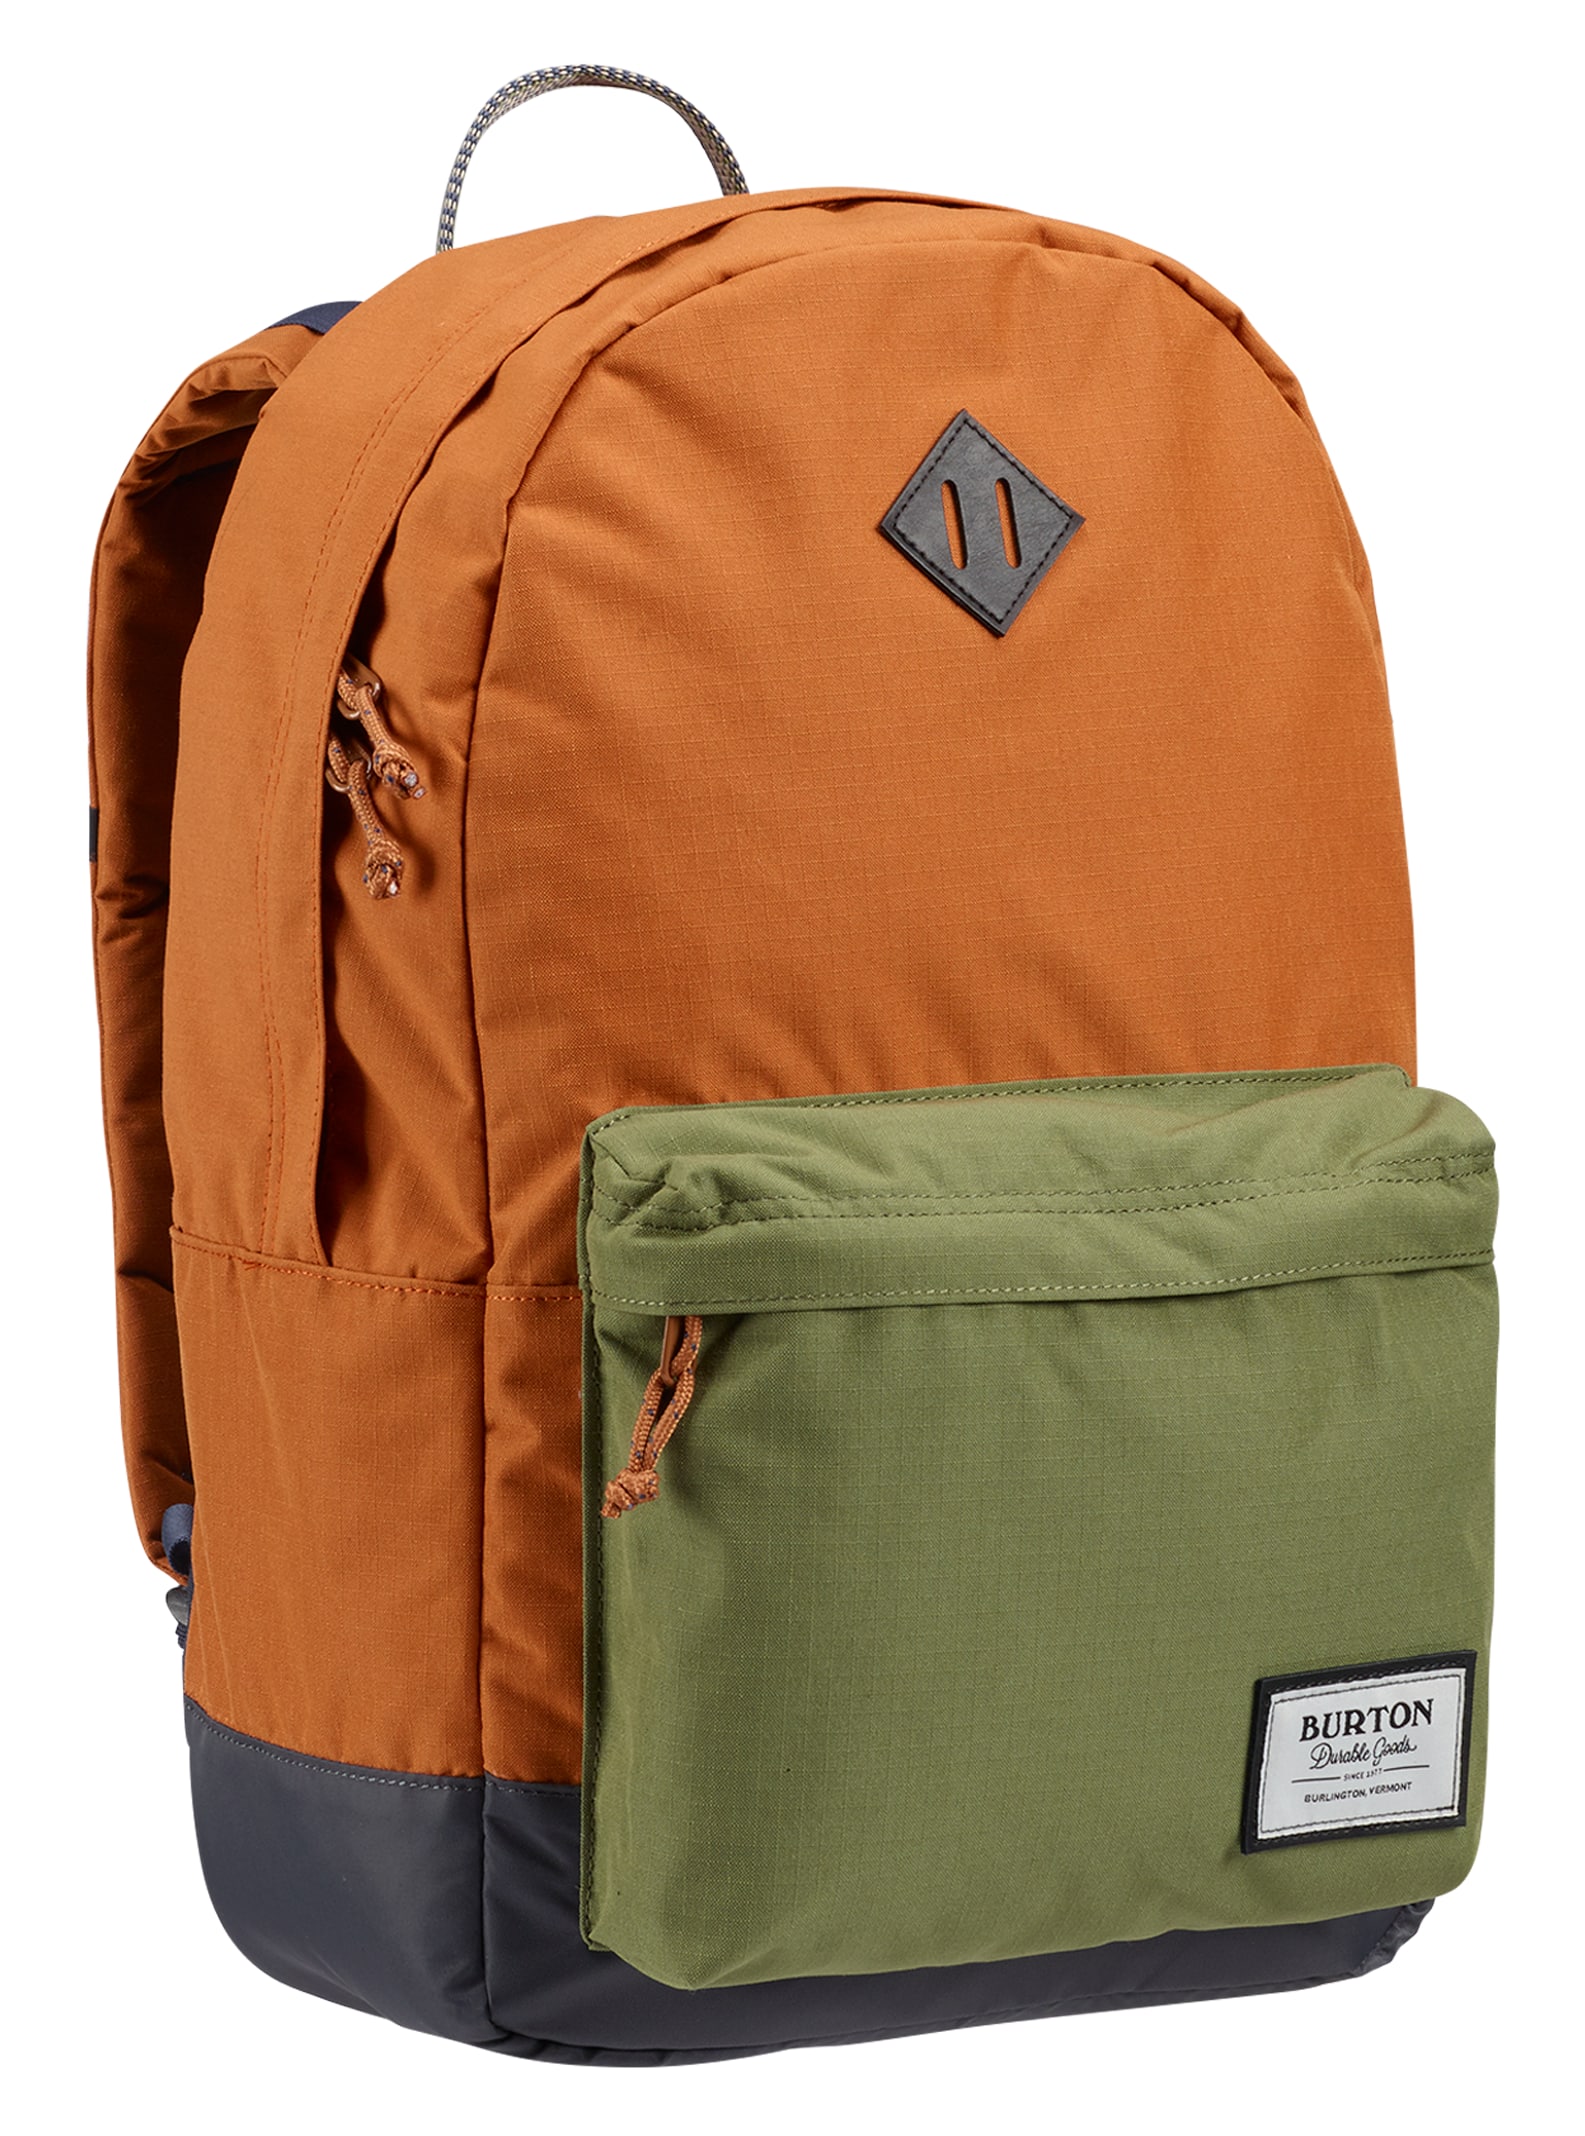 Burton Kettle Backpack | Burton.com Fall 2019 US